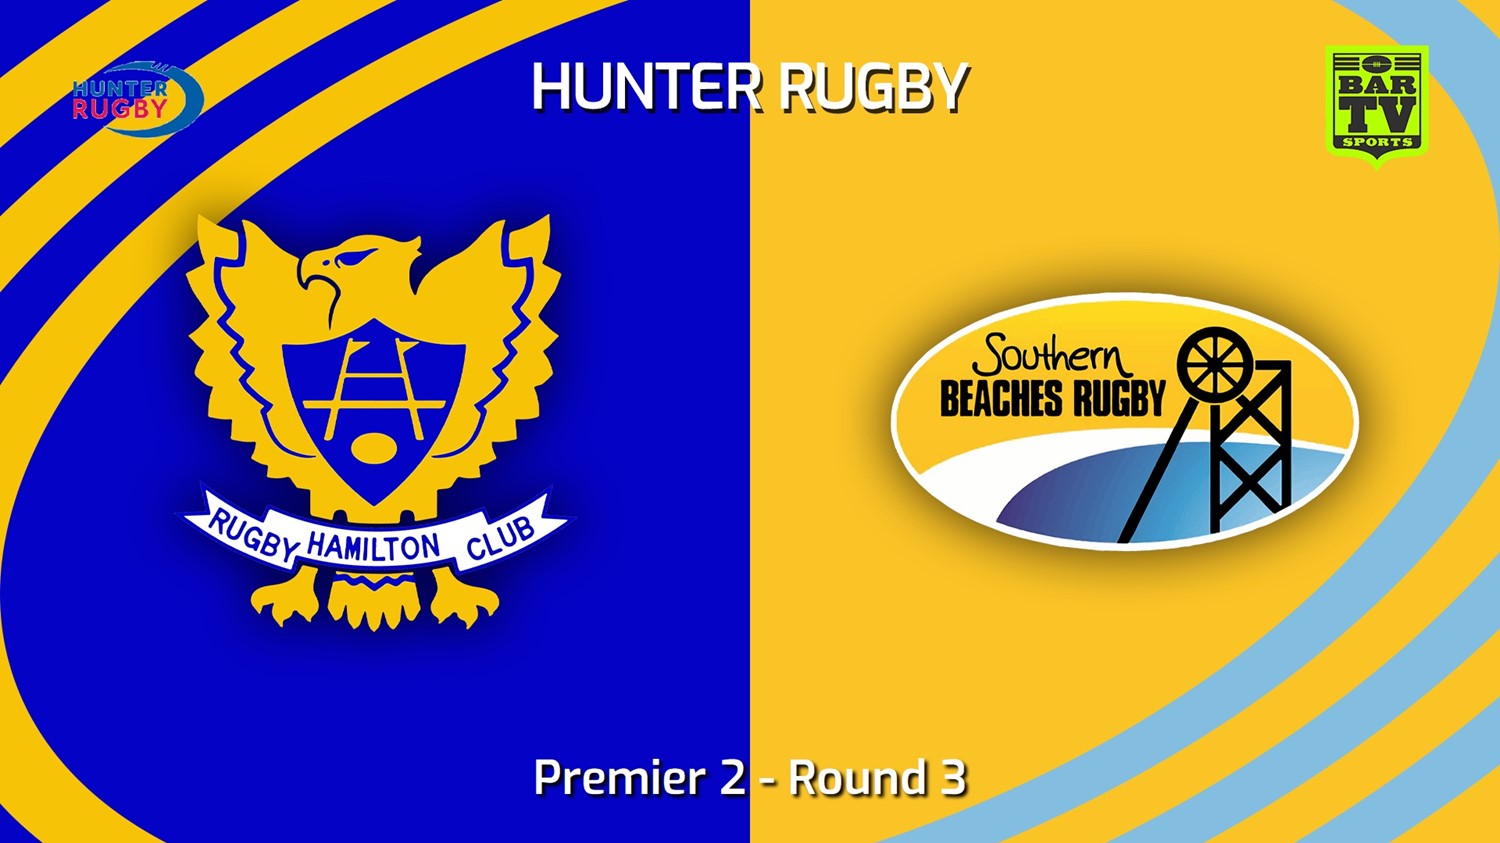 230429-Hunter Rugby Round 3 - Premier 2 - Hamilton Hawks v Southern Beaches Minigame Slate Image